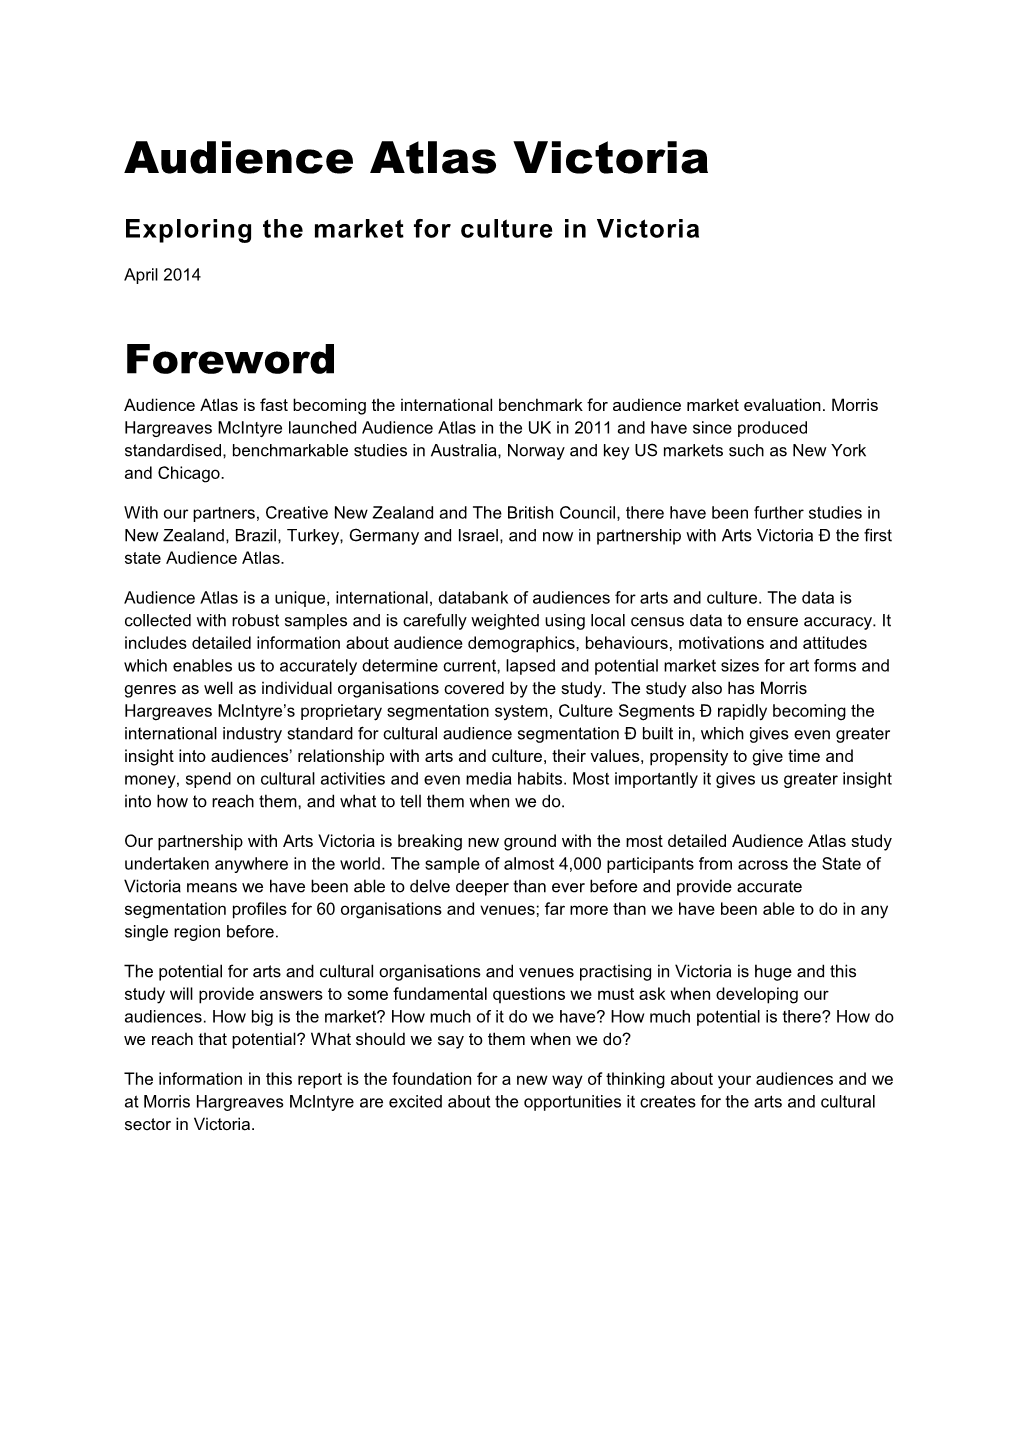 Audience Atlas Victoria Exploring the Market for Culture in Victoria April 2014